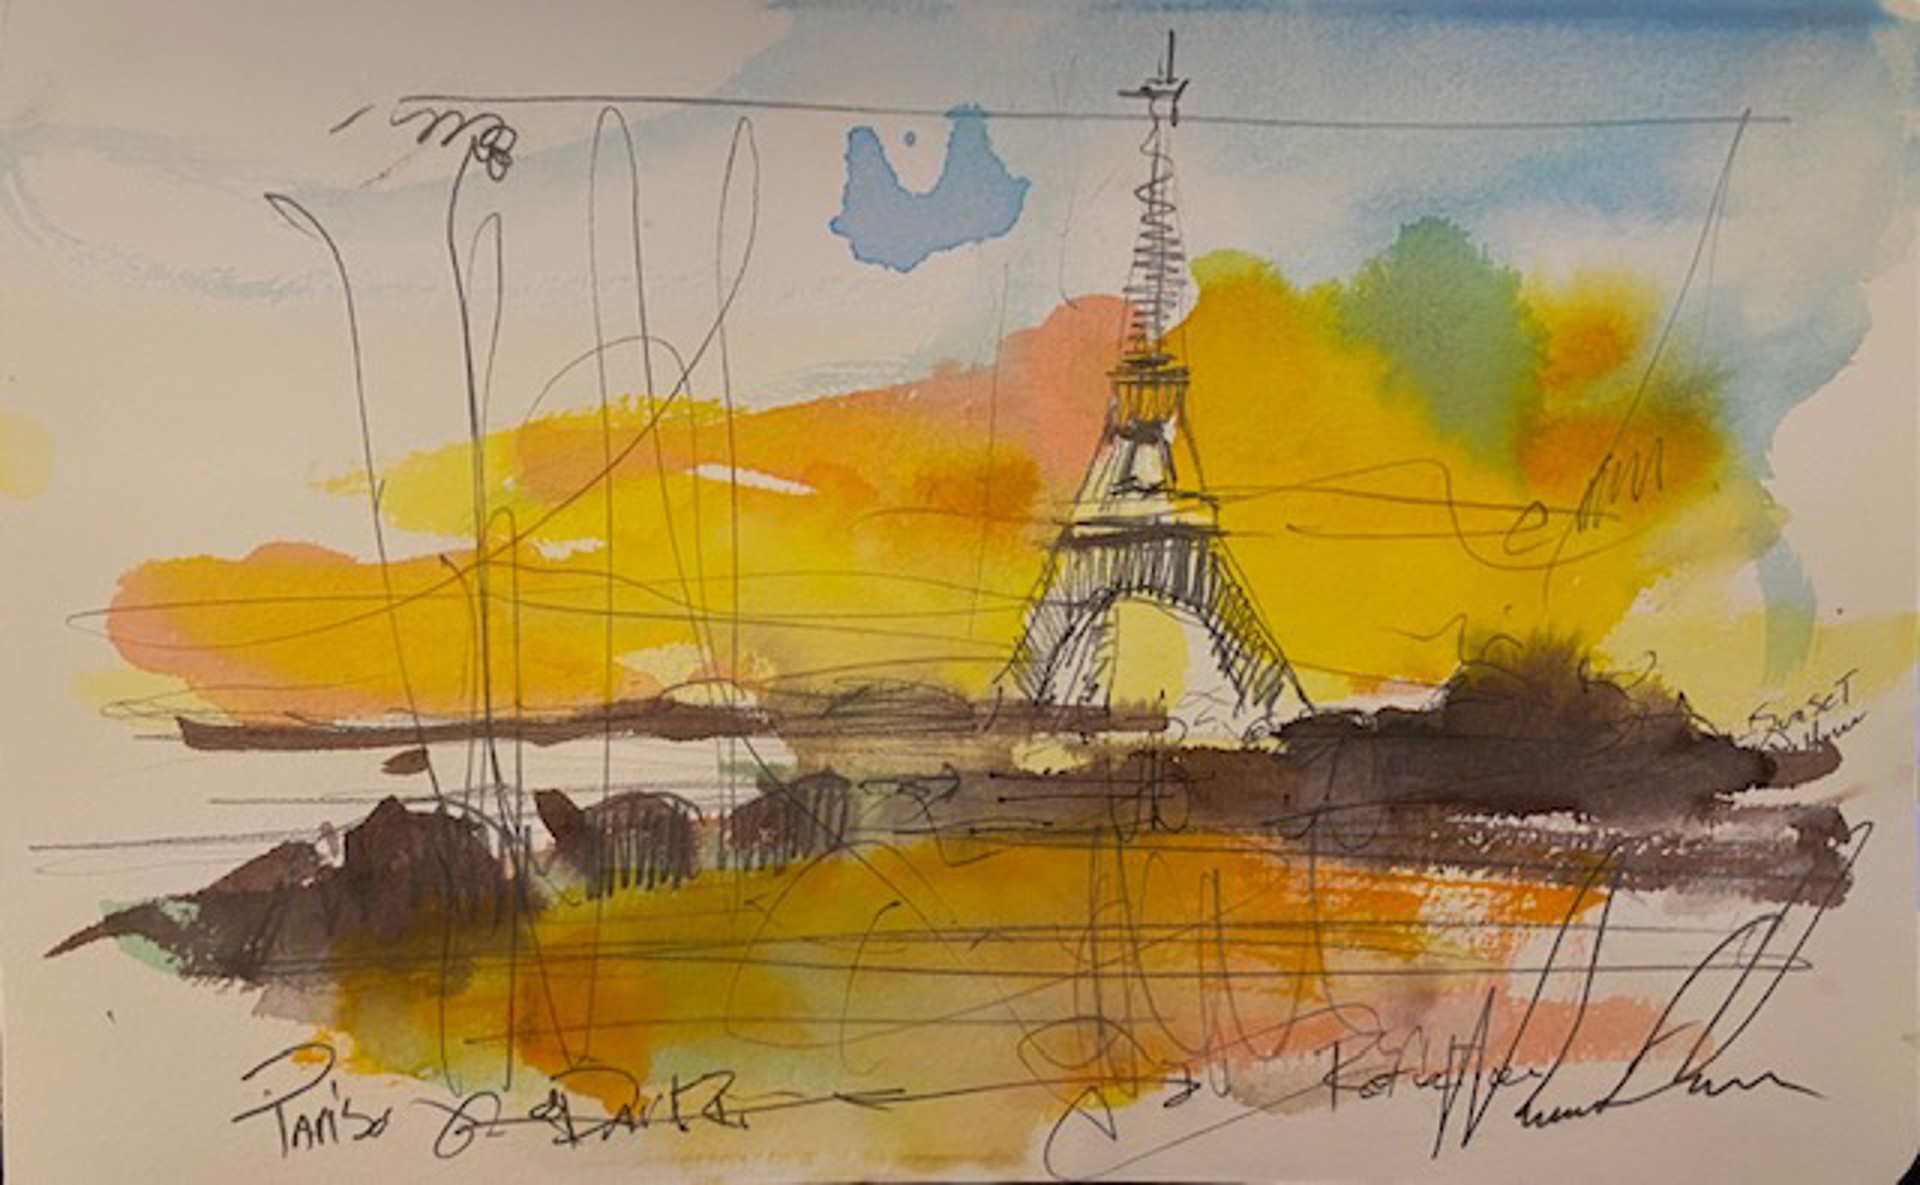 Watercolor Sketch of "Deep in the heart of Paris" 5x8.5".